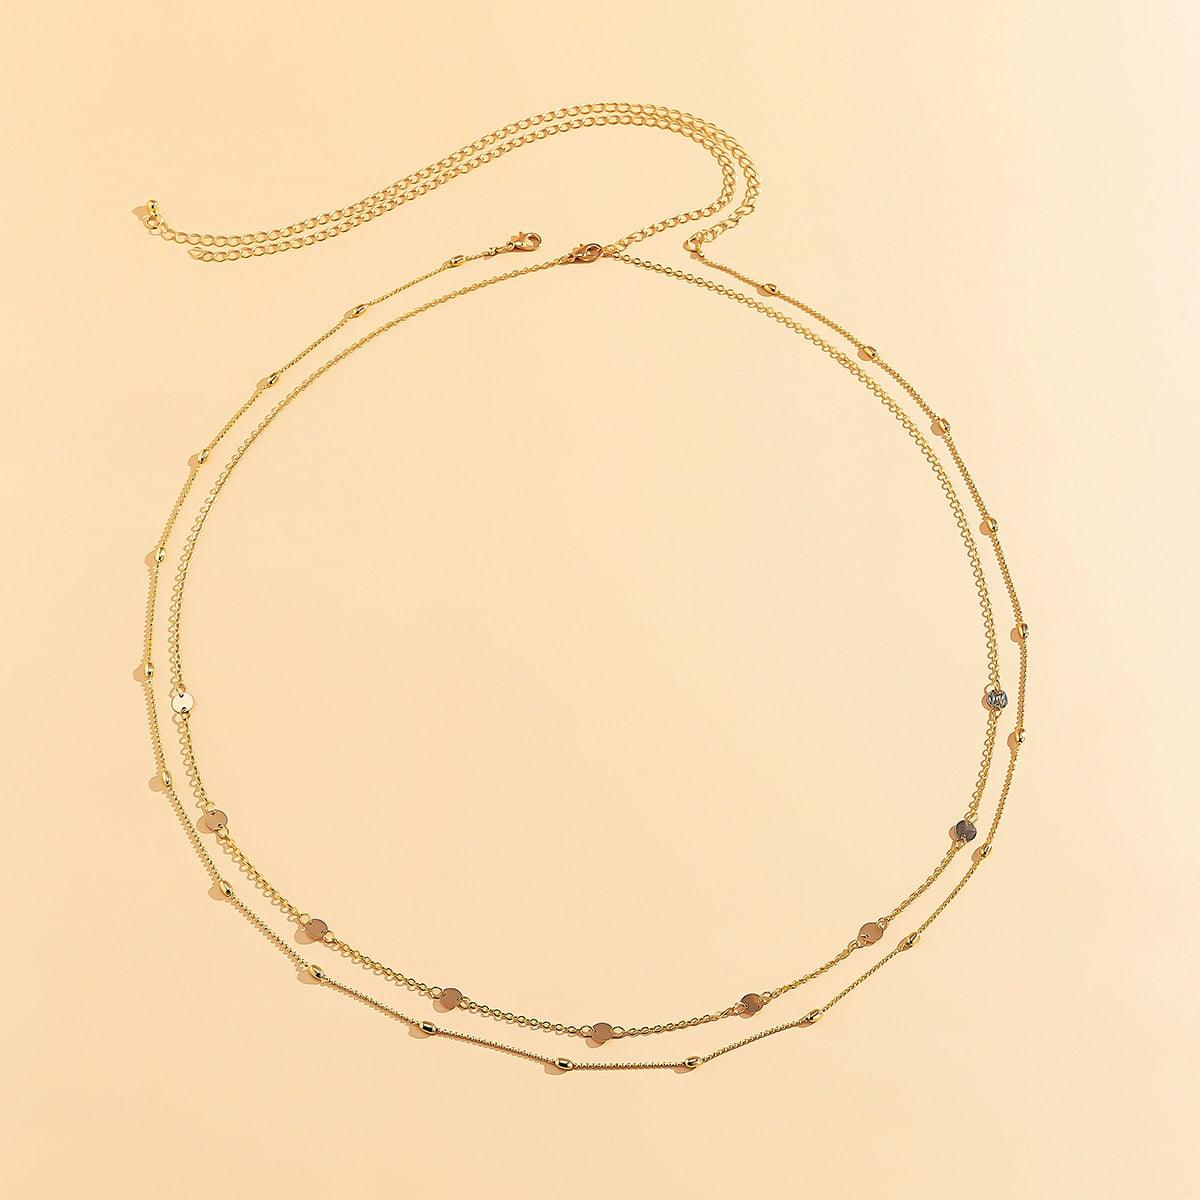 Boho Waist Chain Body Jewelry - The Burner Shop